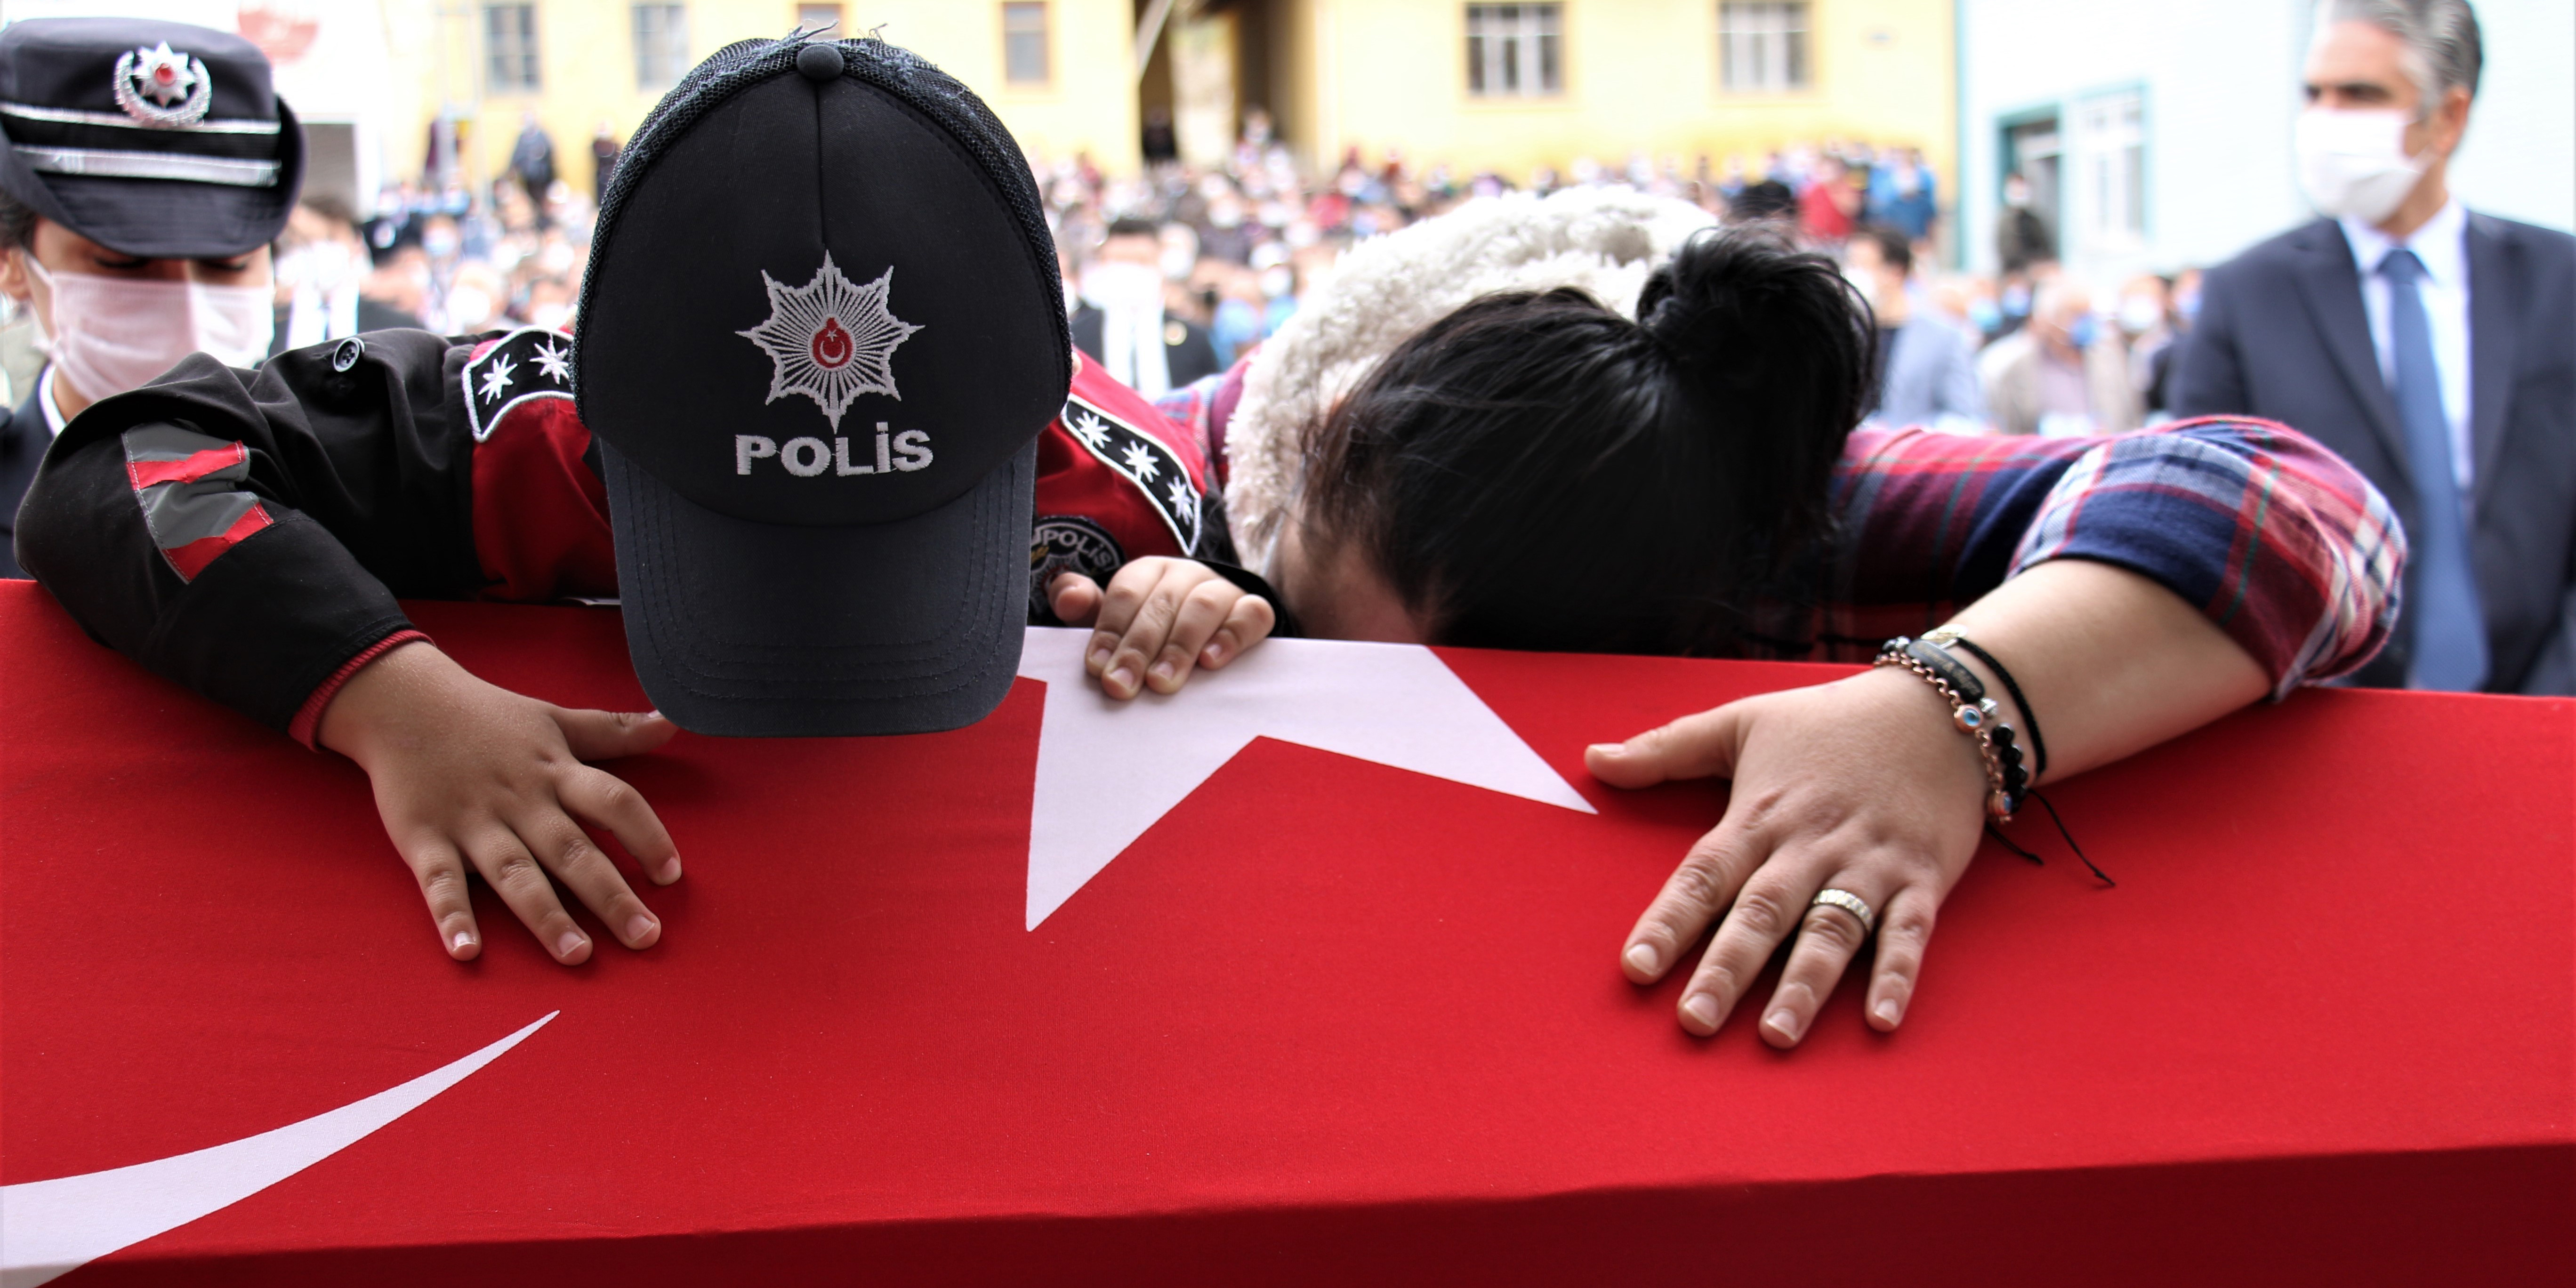 Şehit düşen polis memuru Ankara’da toprağa verildi